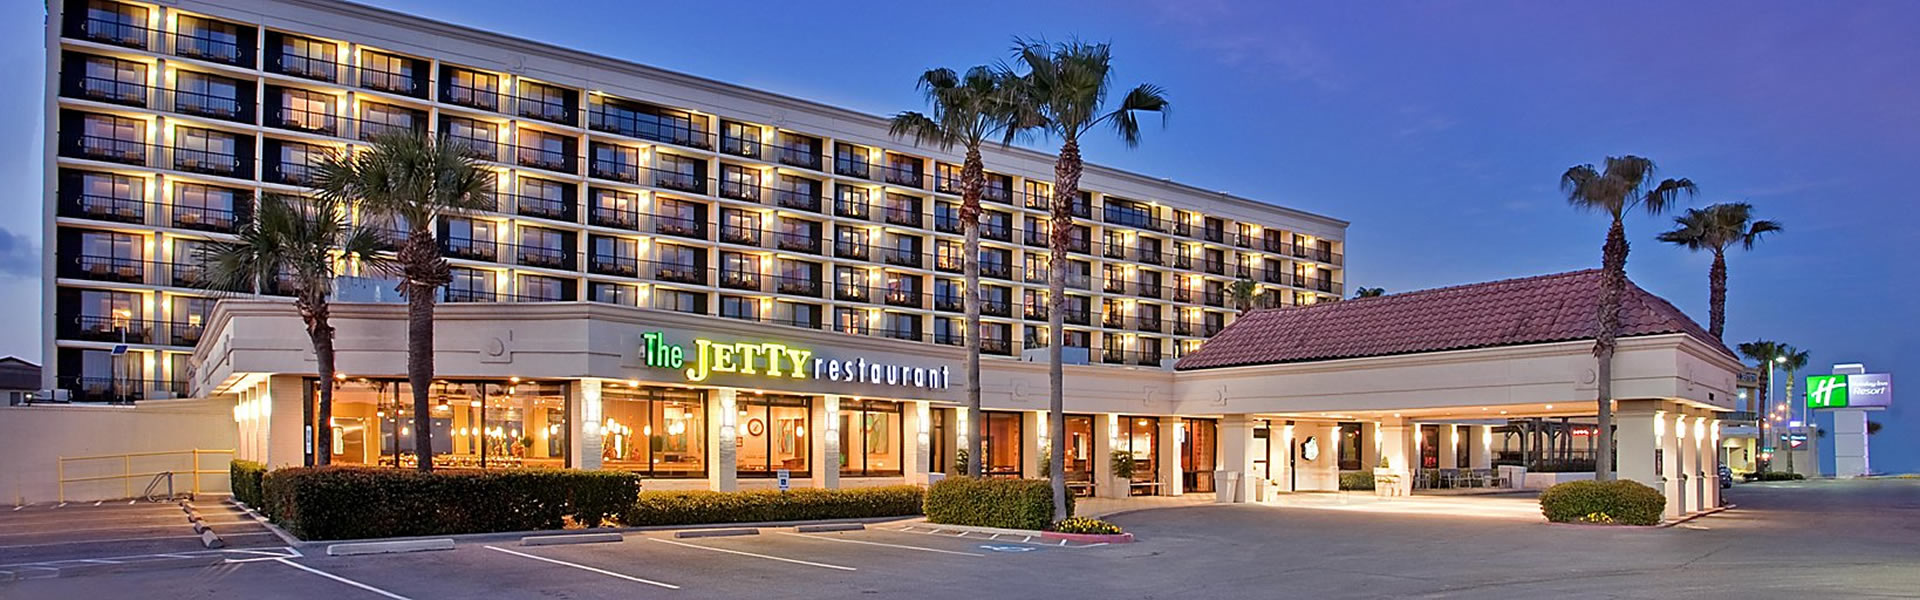  Holiday Inn Resort on the Beach, Galveston TX